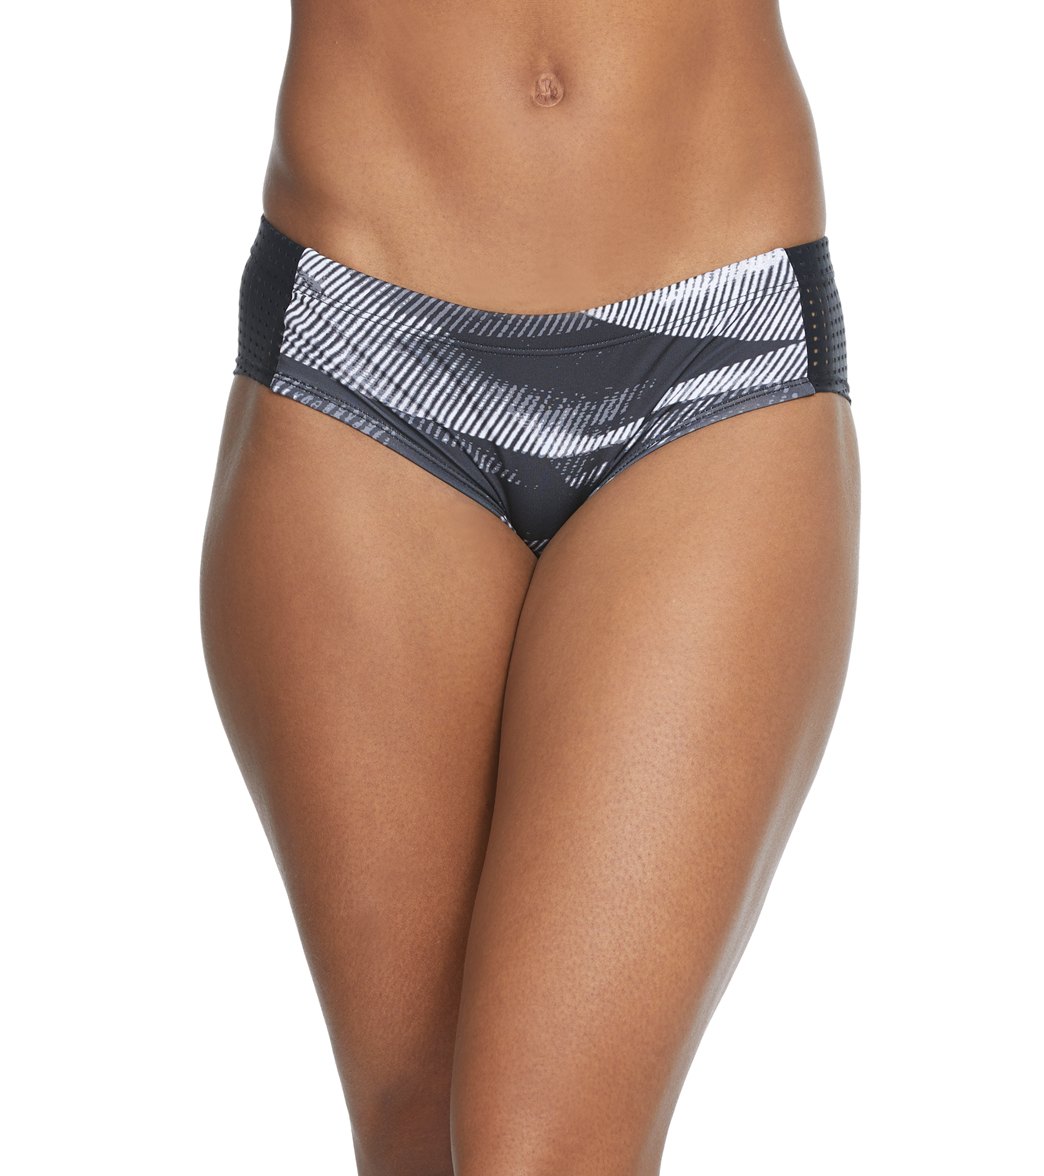 Nike Lineup Bikini Bottom - Black Small Polyester/Spandex - Swimoutlet.com